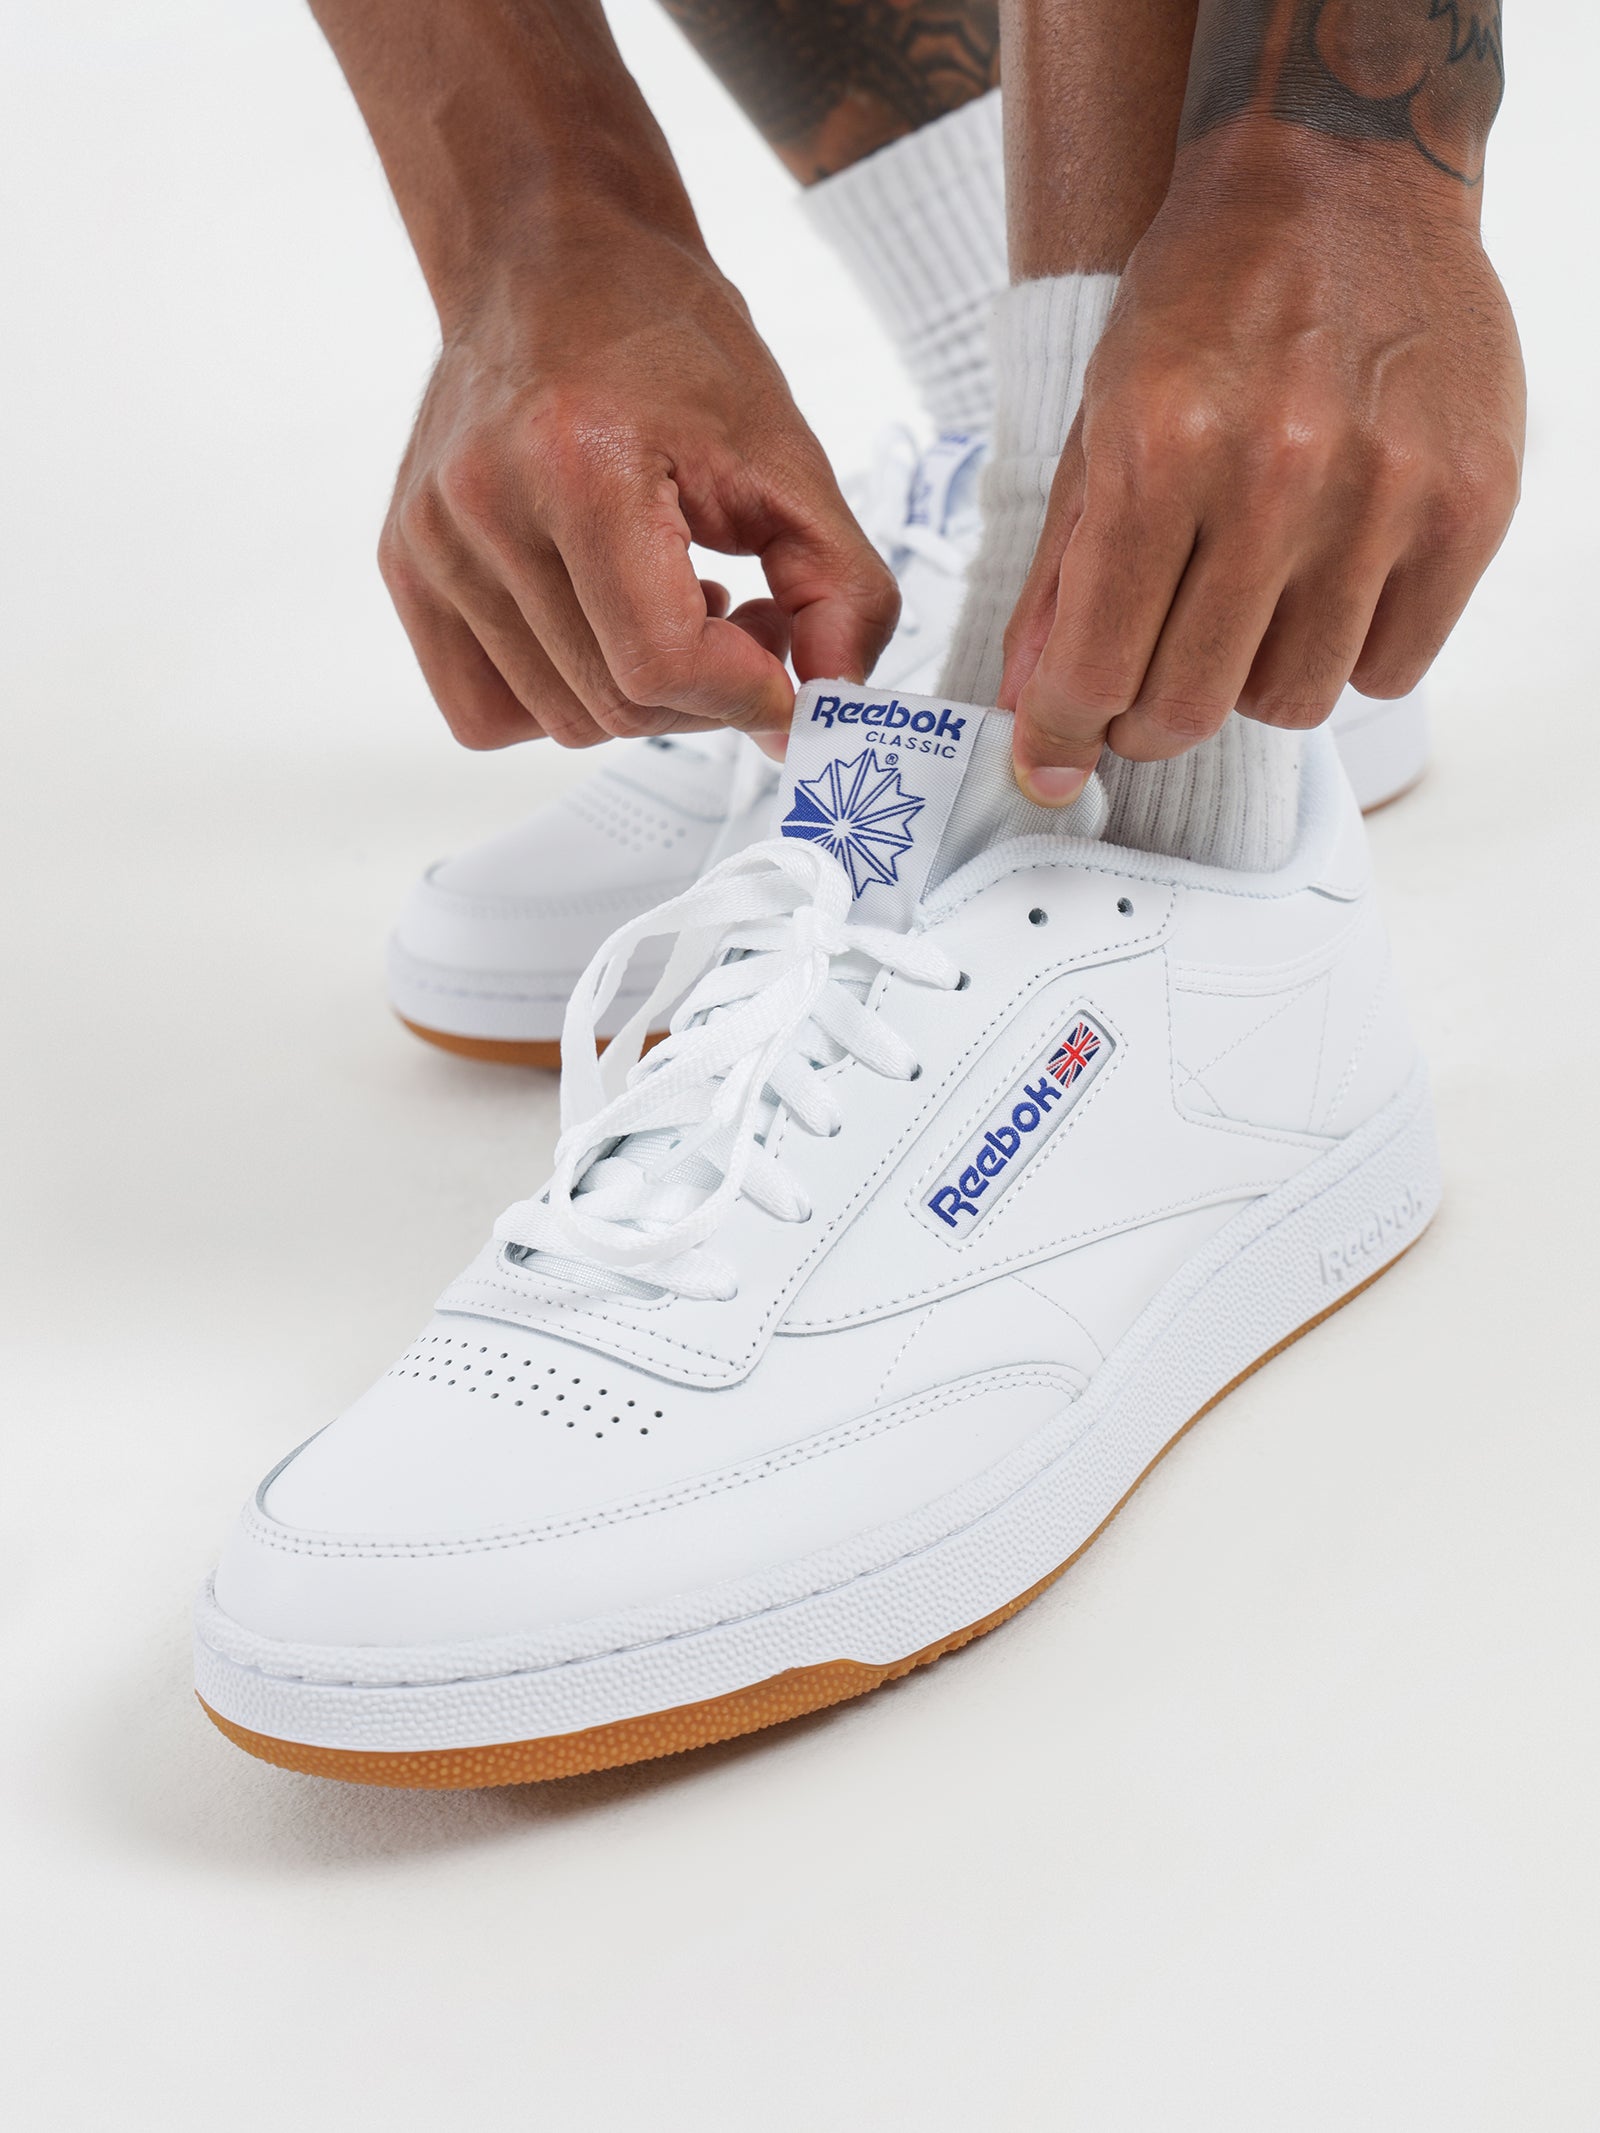 Unisex Club C 85 Sneakers in White & Blue - Glue Store